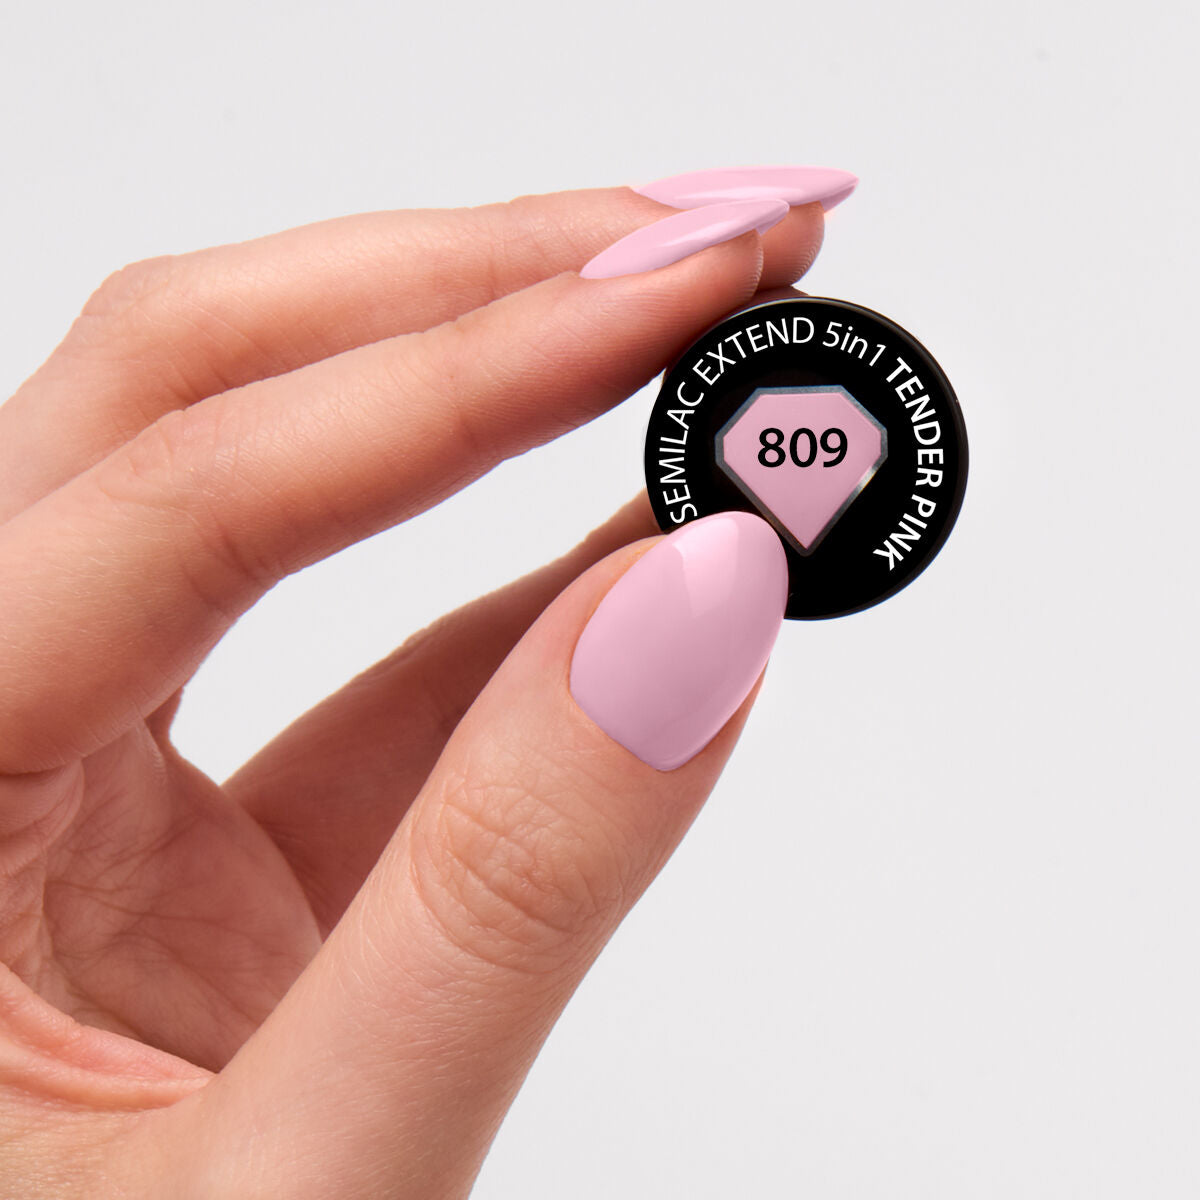 Extend 5i1 Tender Pink 809 - 7 ml-Semilac-NR Kosmetik